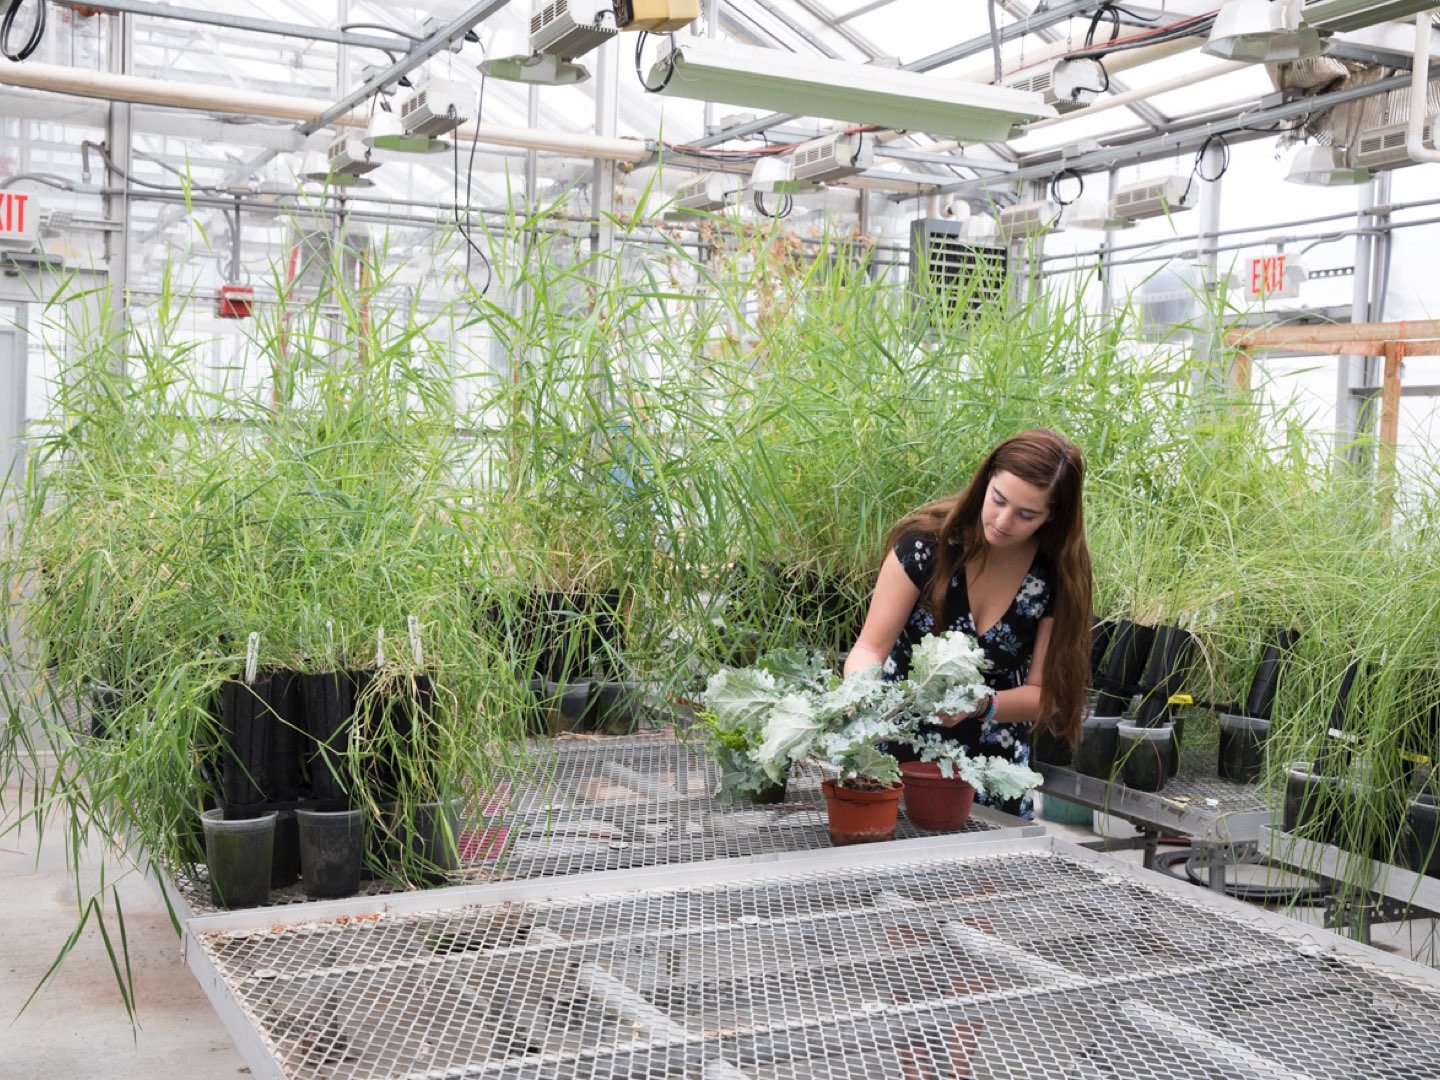 Giannina Guzman checks plants in the greenhouse on Villanova’s campus.